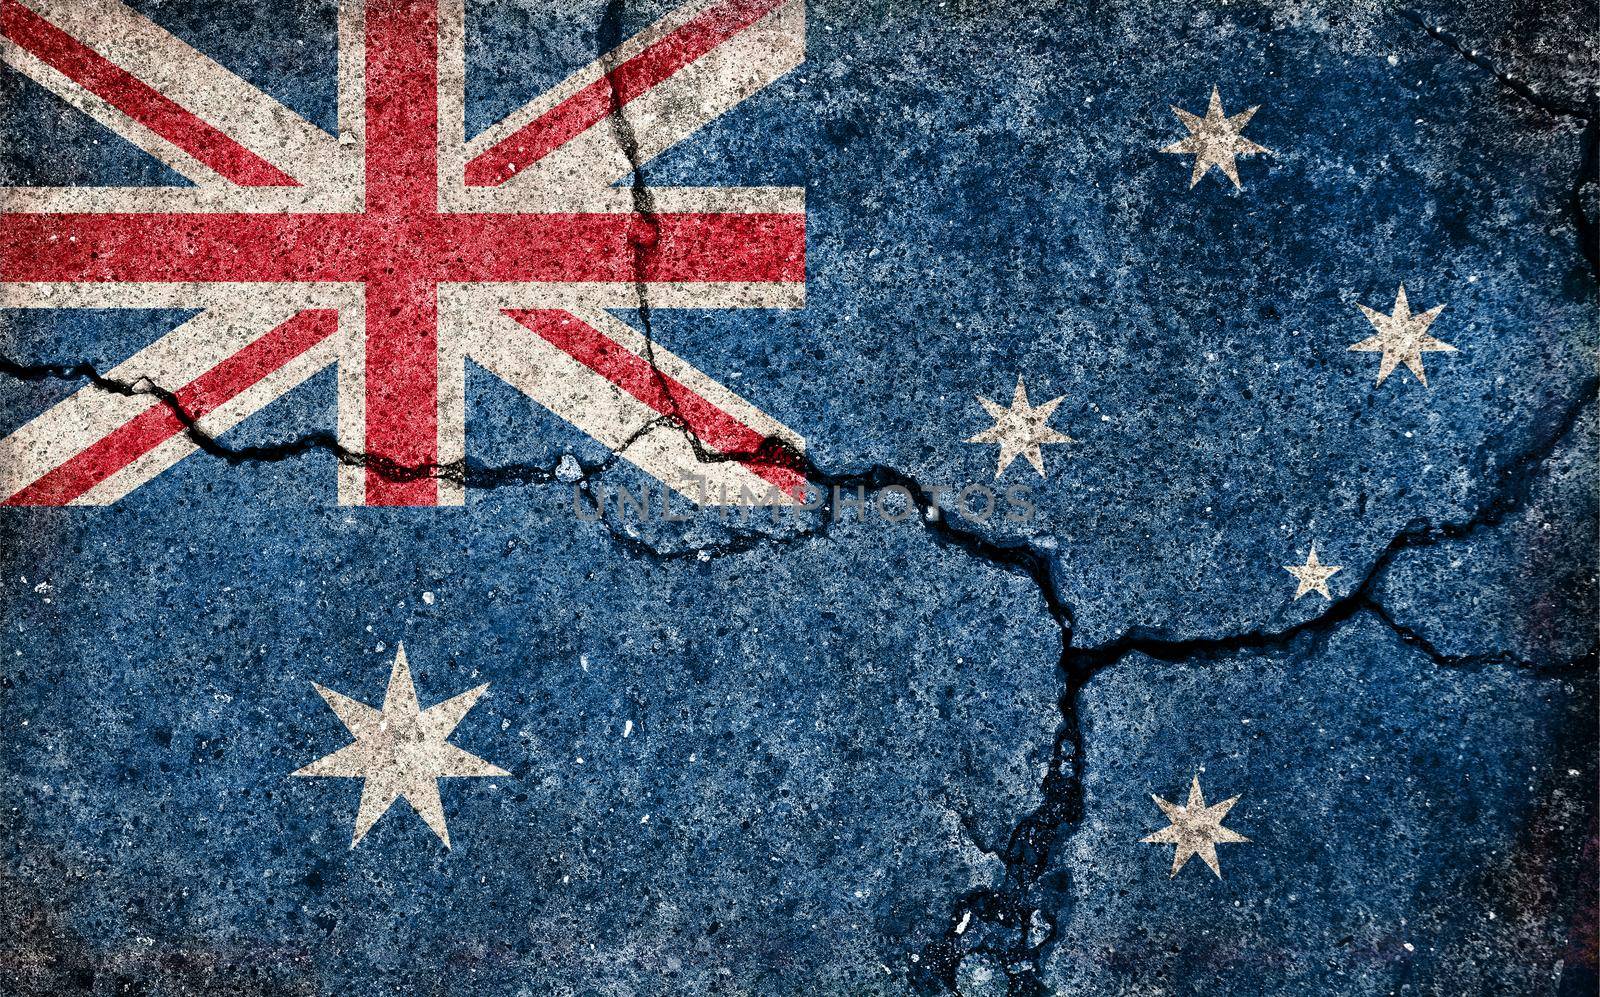 Grunge country flag illustration (cracked concrete background) / Australia by barks